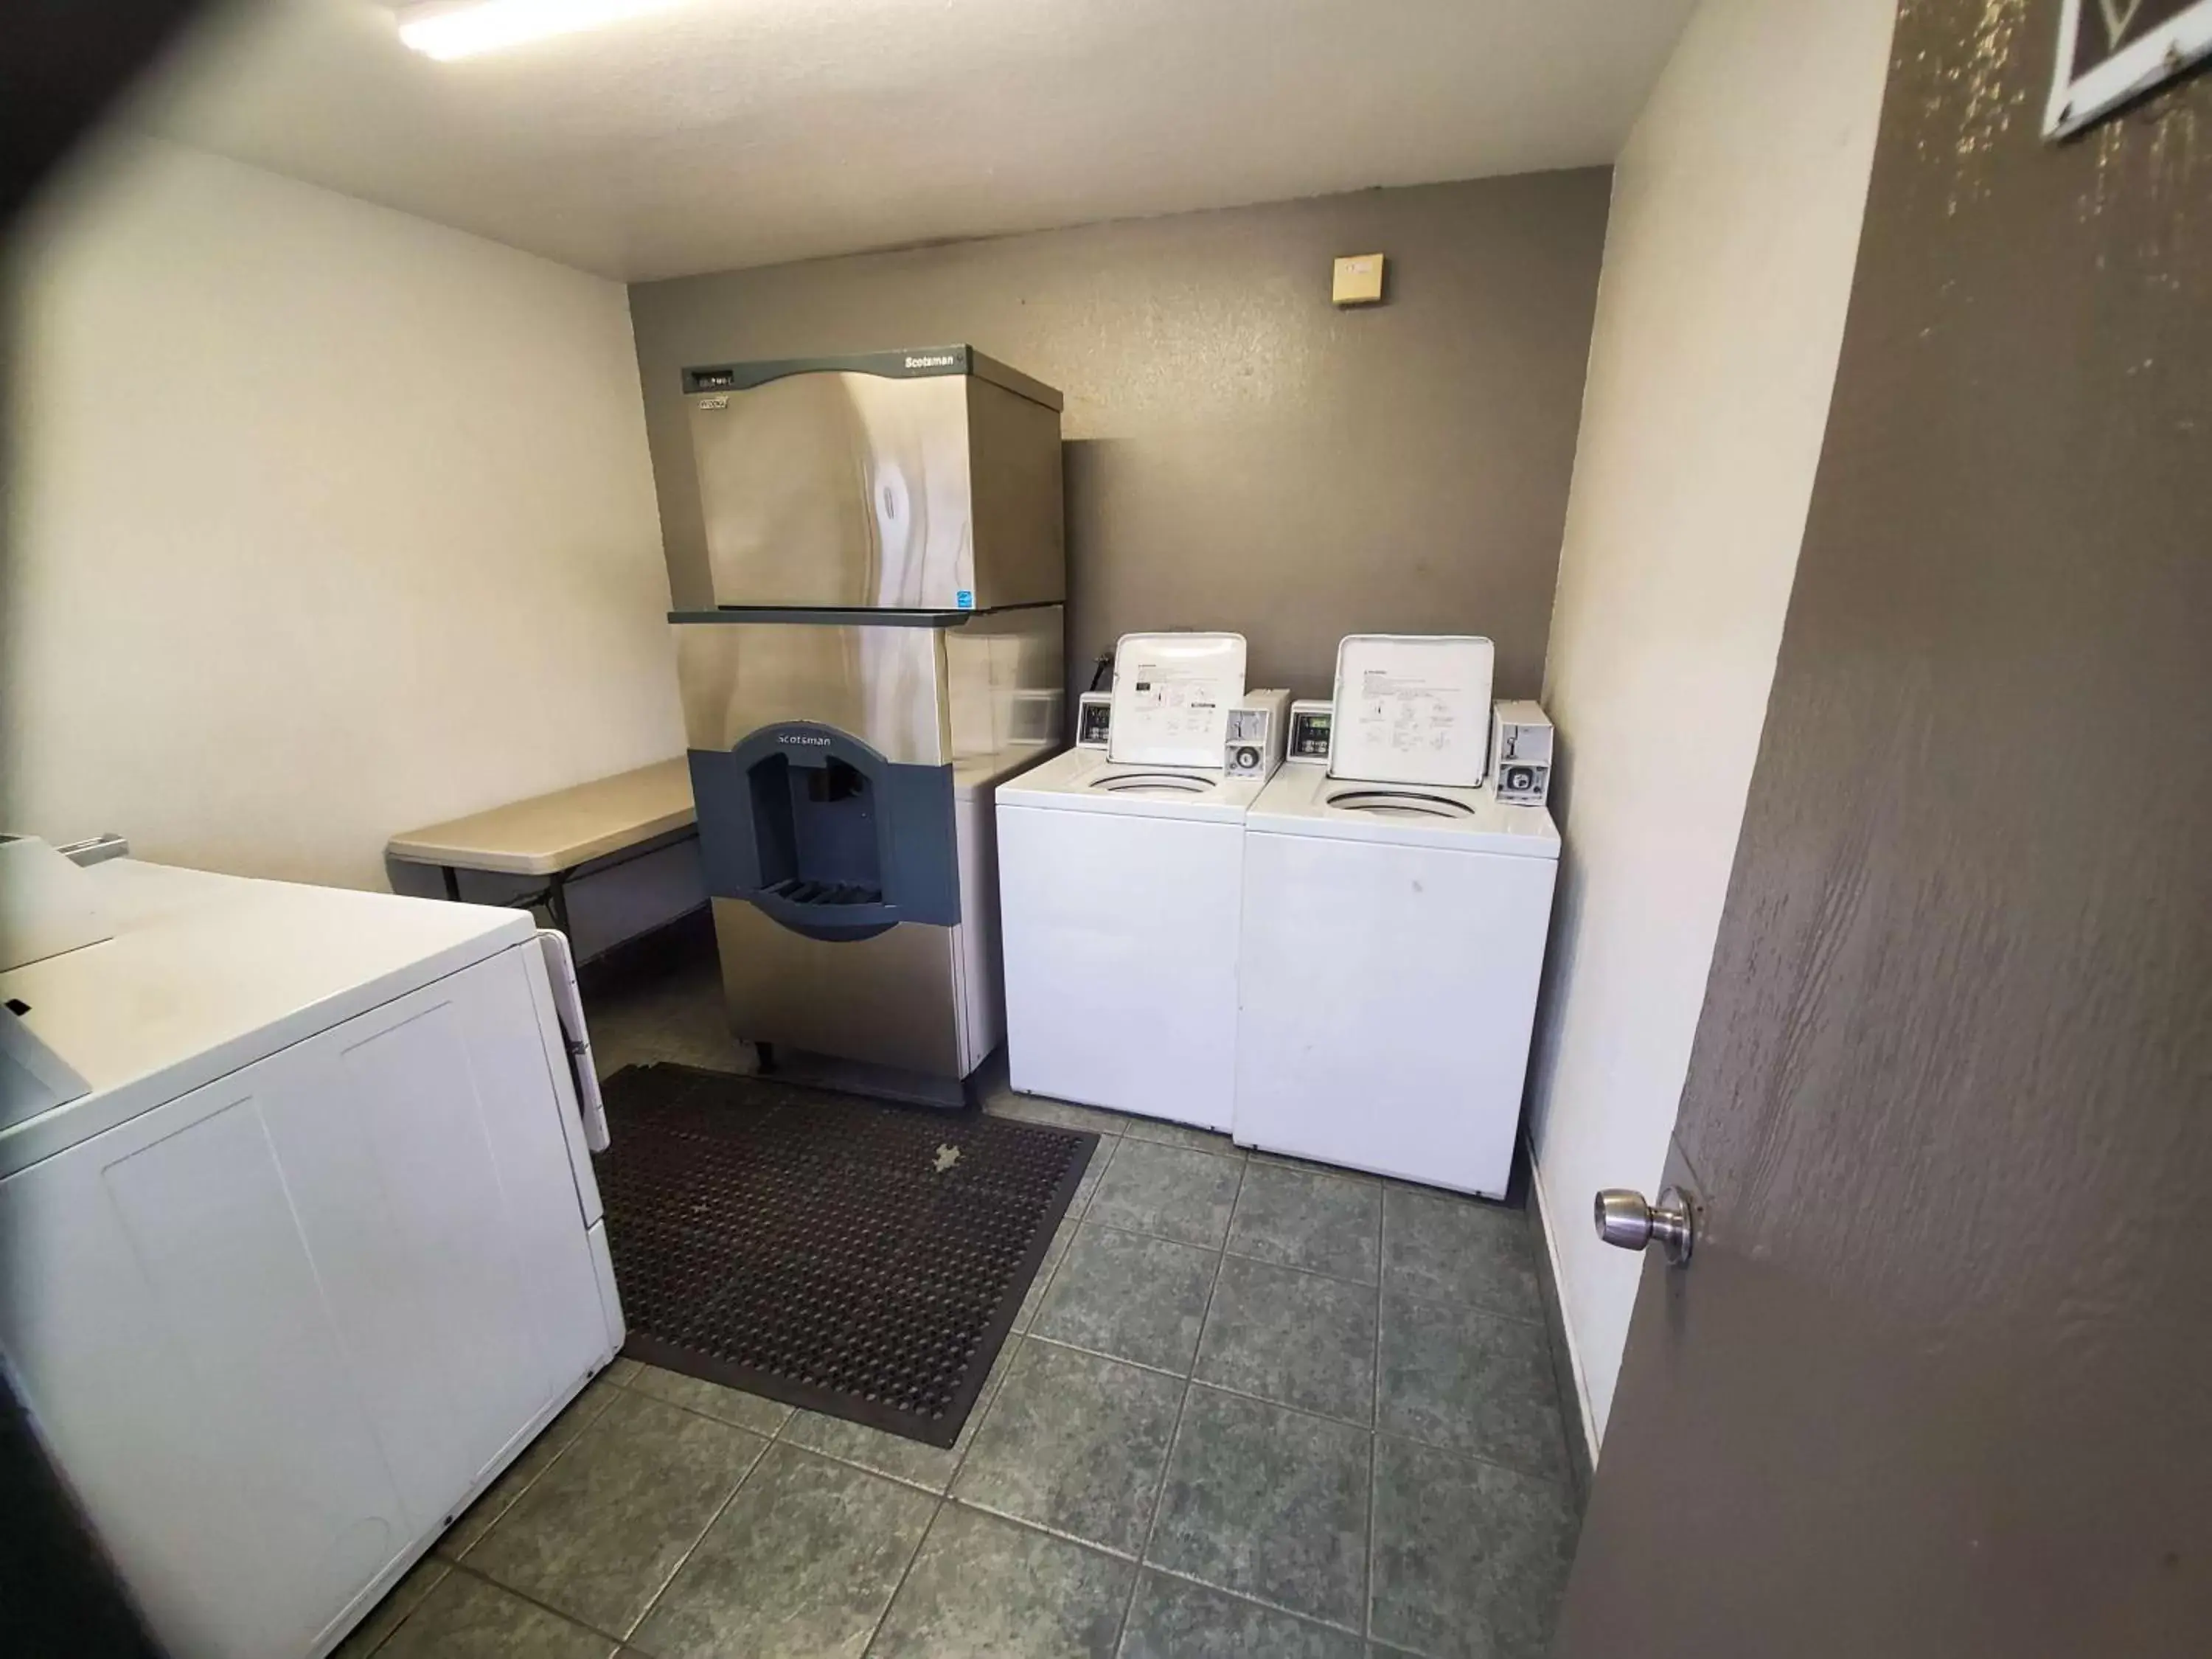 On site, Bathroom in Studio 6-National City, CA - Naval Base San Diego